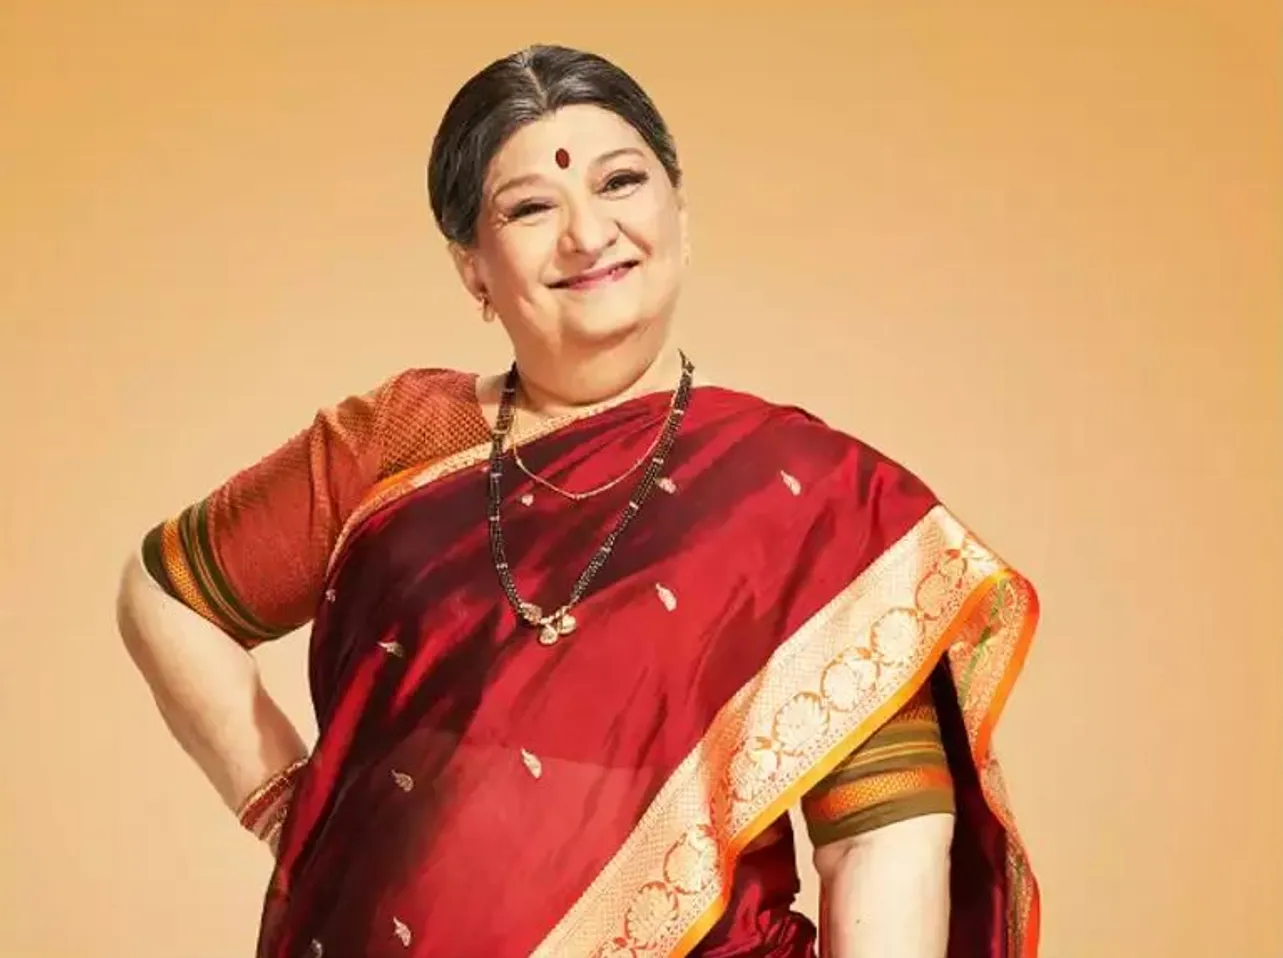 Bharati Achrekar on Her Role as Radhika Wagle in Wagle Ki Duniya